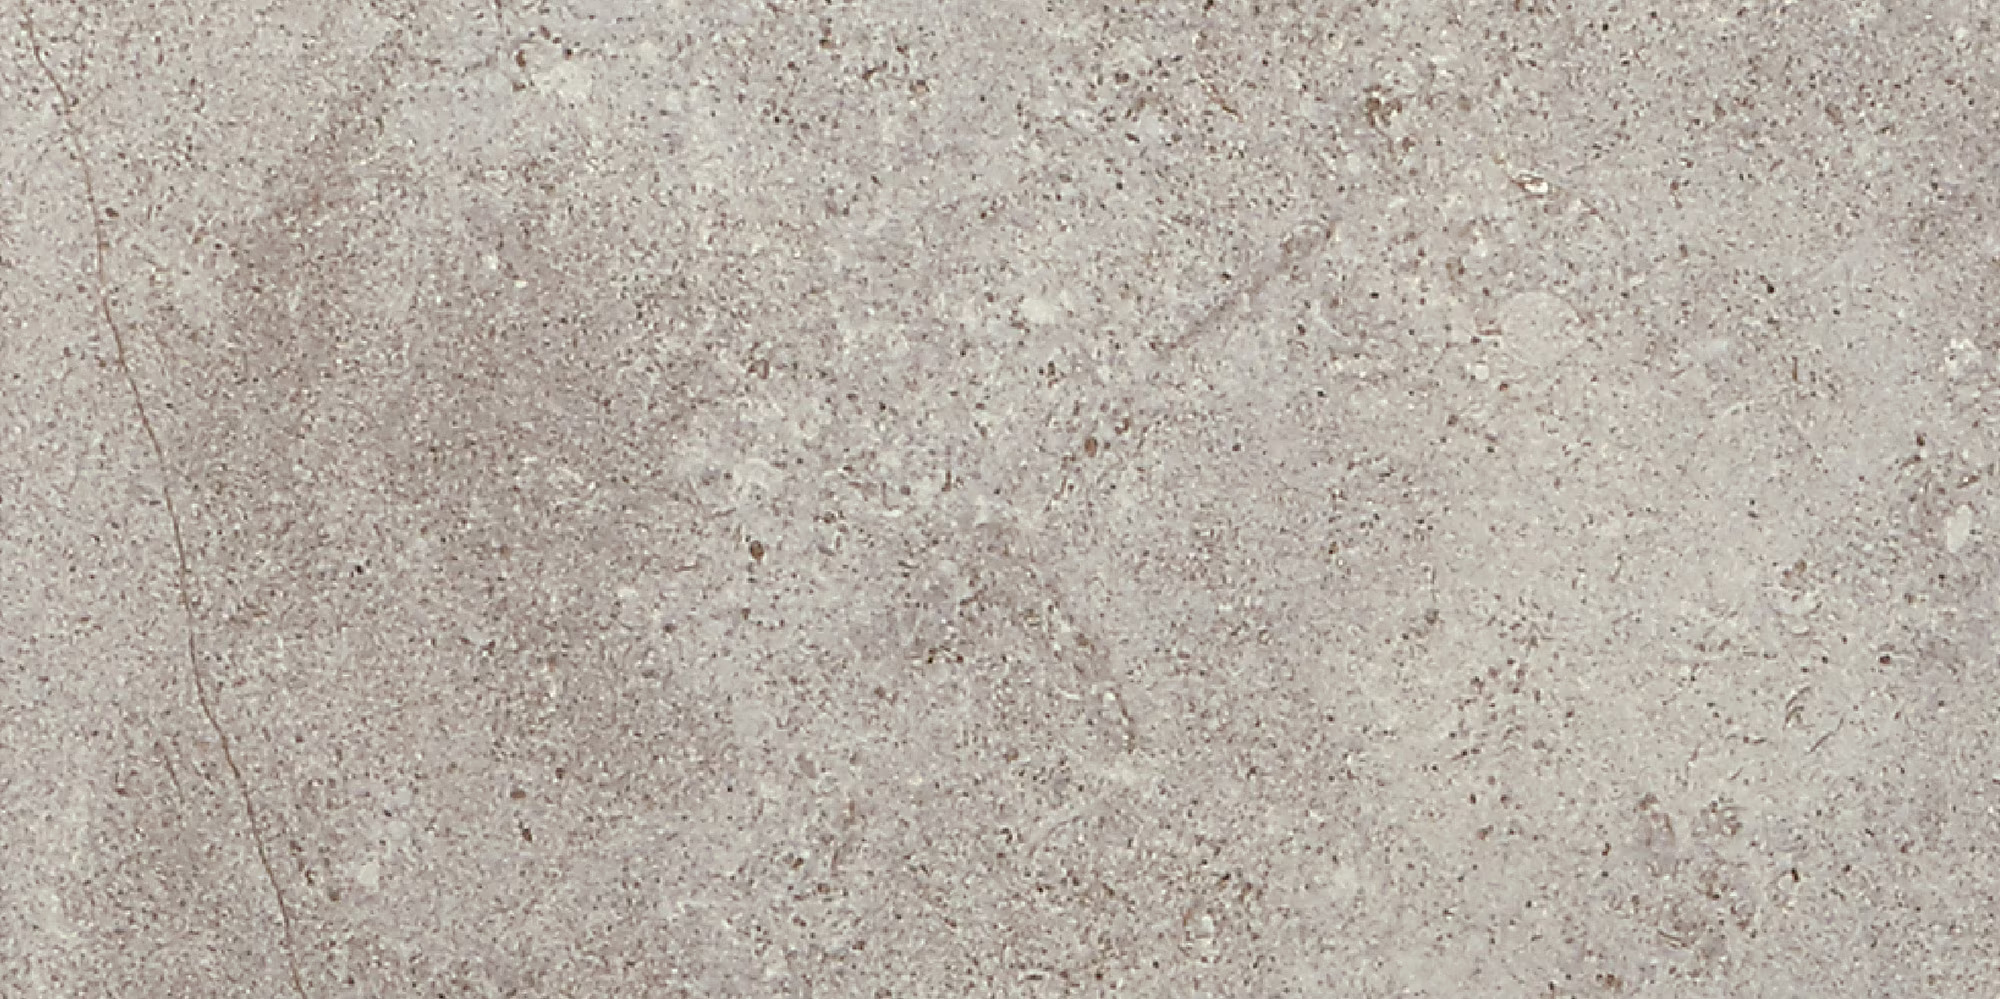 Abound Nimbus, gray twelve by twenty-four inch stone look ceramic tile